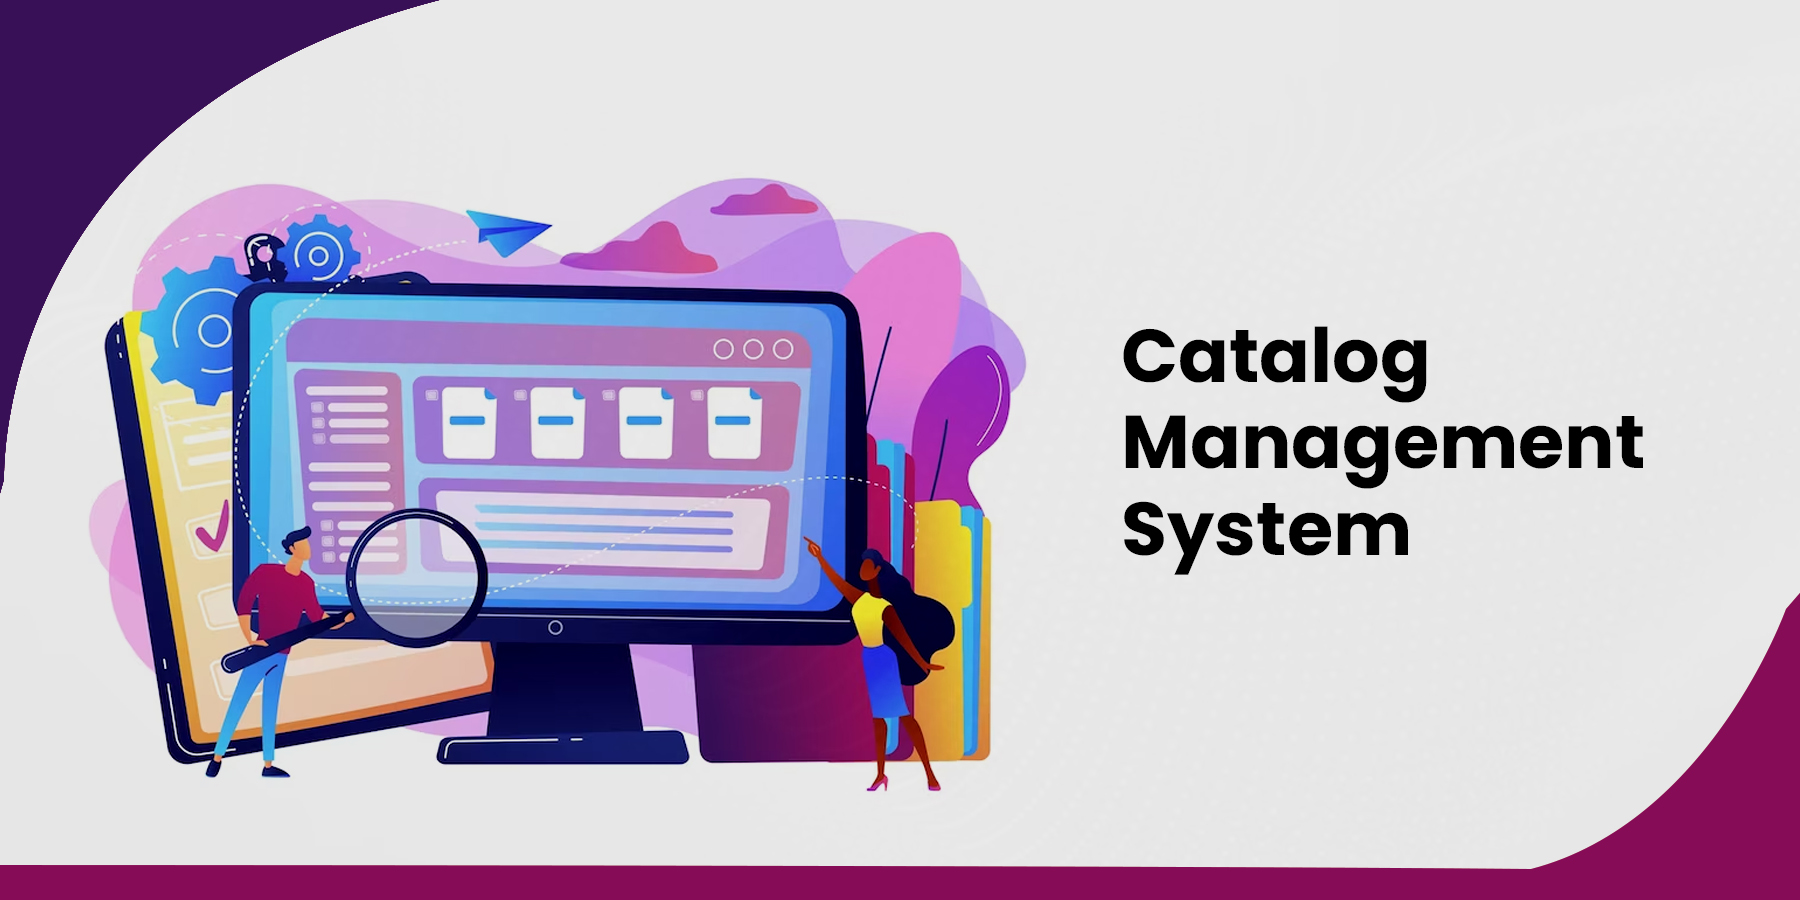 Catalog Management System